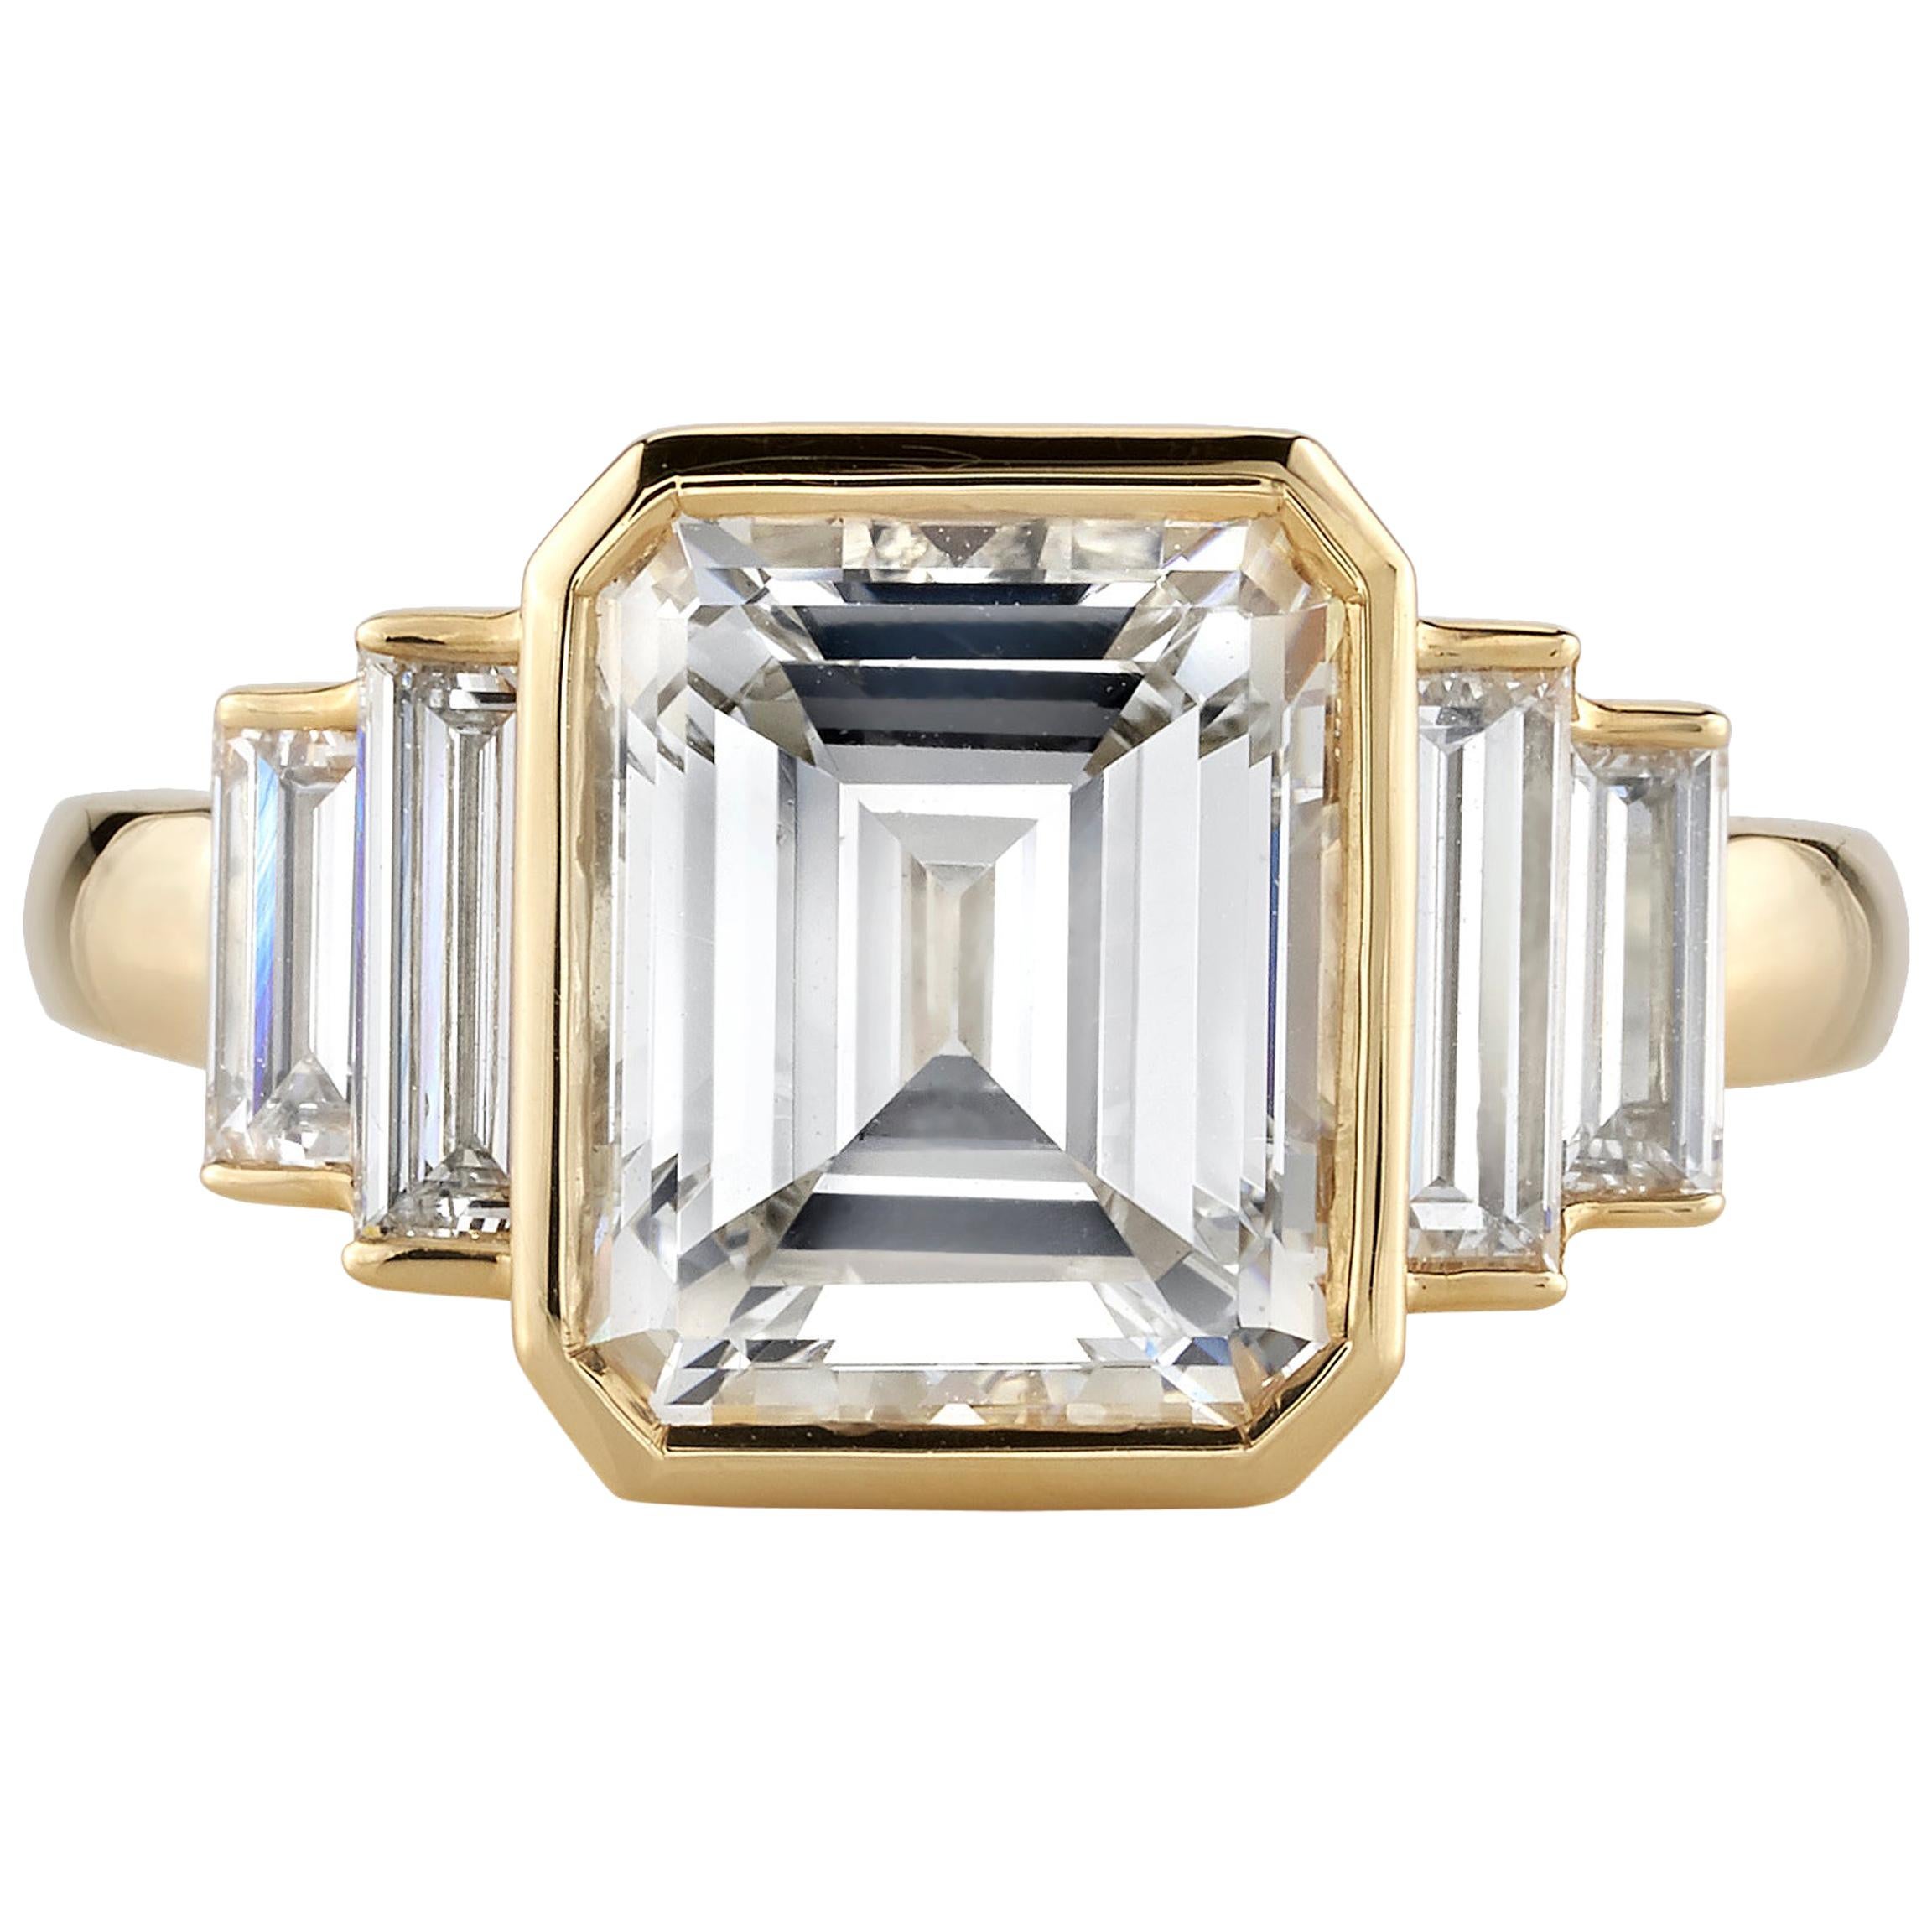 3.34 Carat F/VS1 GIA Certified Emerald Cut Diamond Set in an 18 Karat Gold Ring